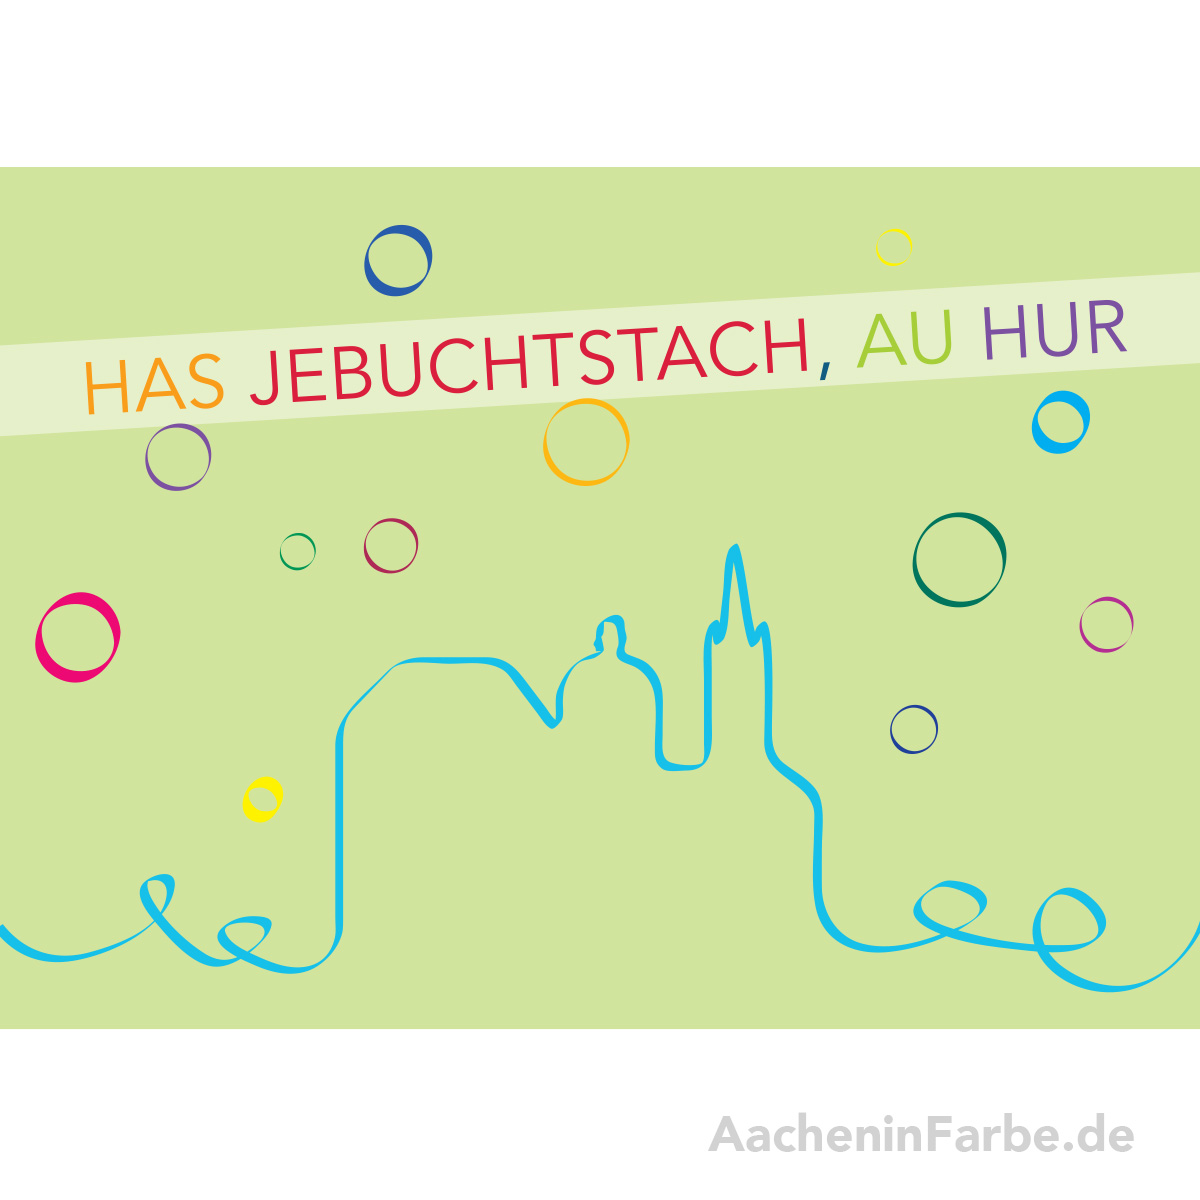 Grußkarte "Has Jebuchtstach, au hur"